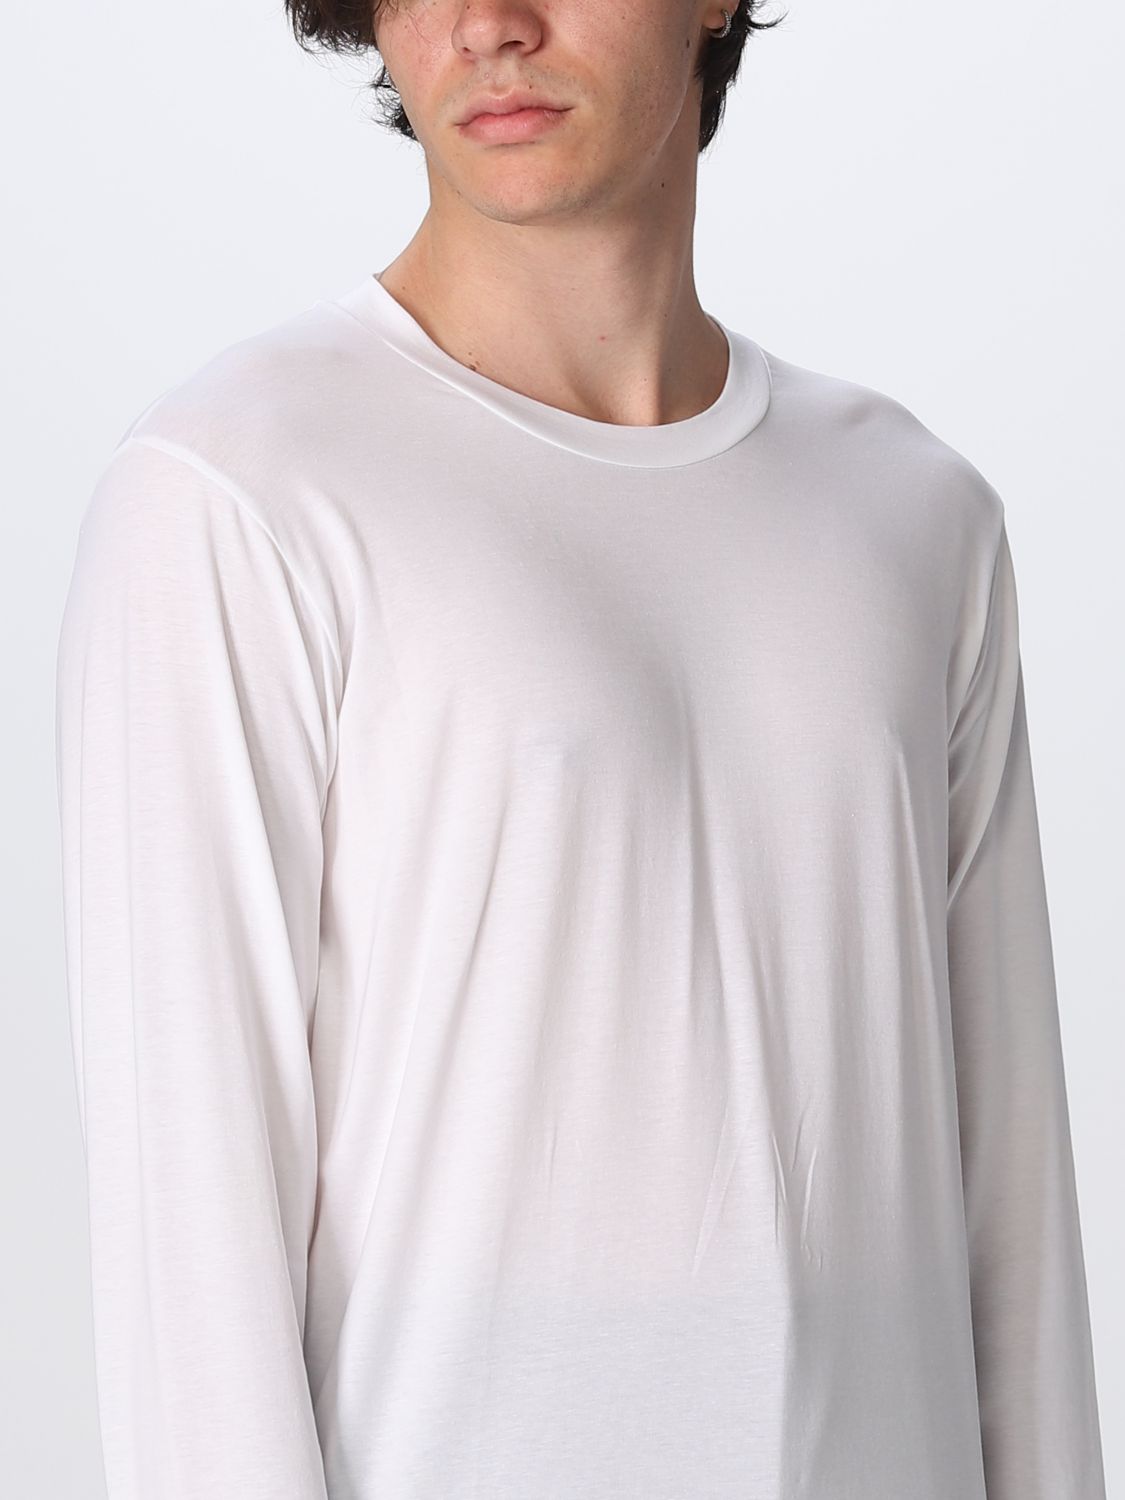 Outlet de Tom Ford: Camiseta para hombre, Blanco | Camiseta Tom Ford  T4M14141 en línea en 